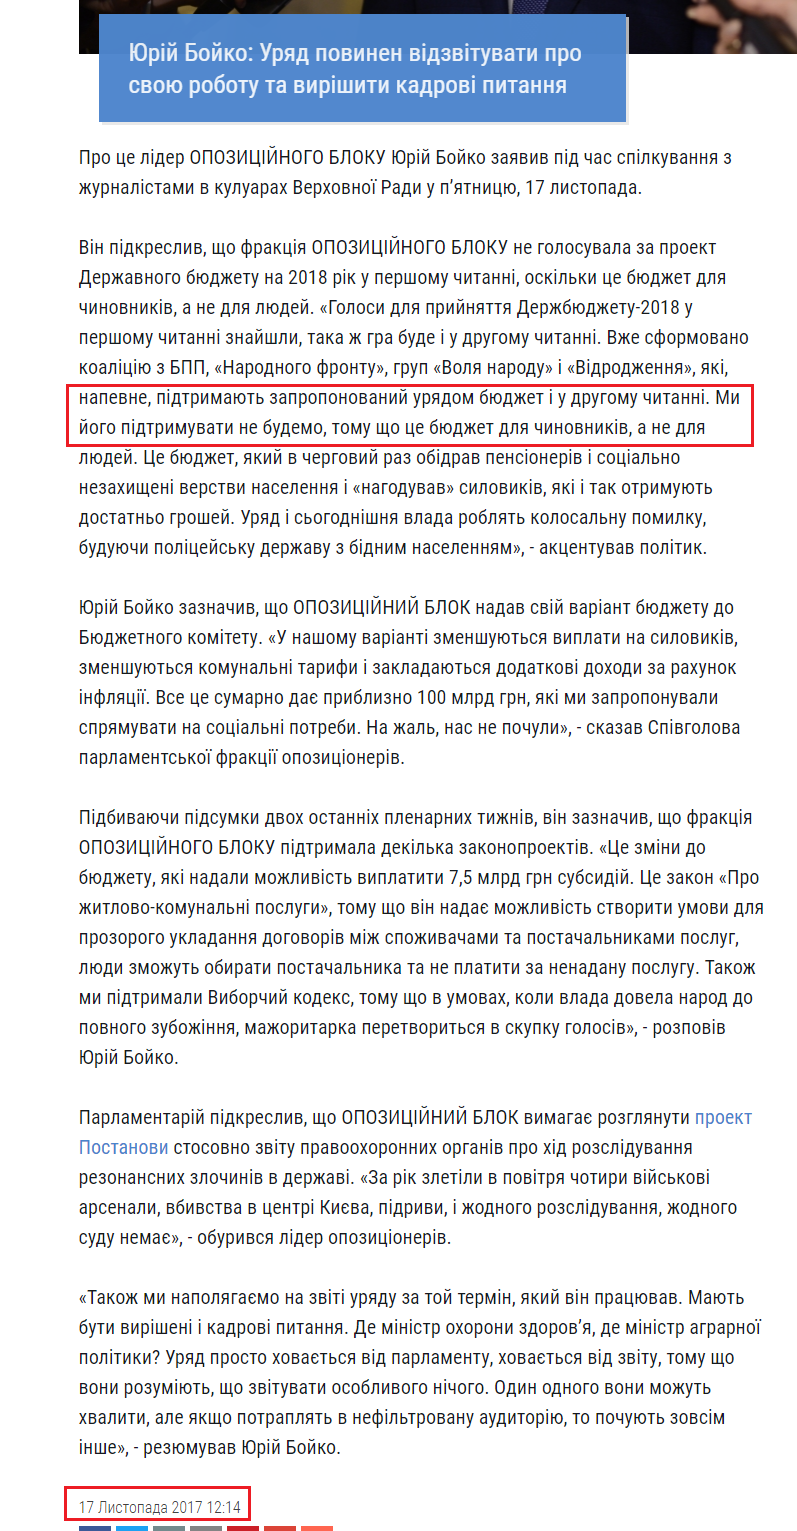 http://opposition.org.ua/uk/news/yurij-bojko-uryad-povinen-vidzvituvati-pro-svoyu-robotu-ta-virishiti-kadrovi-pitannya.html